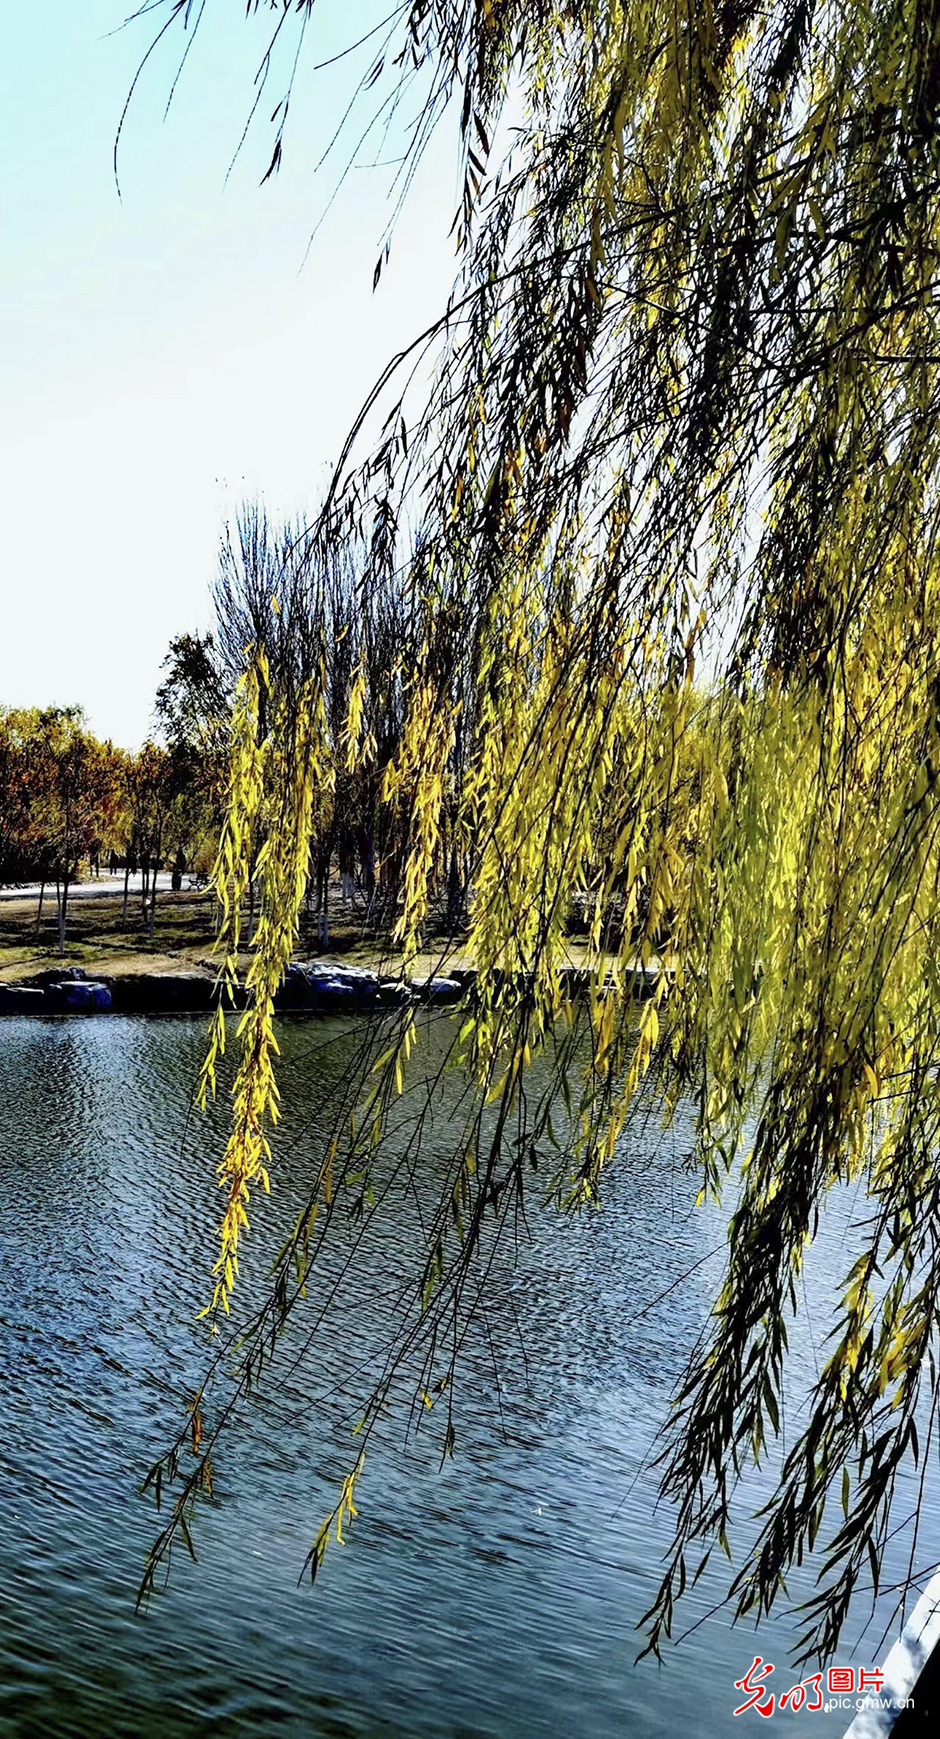 In pics: Nanhaizi Park, largest wetland park in Beijing